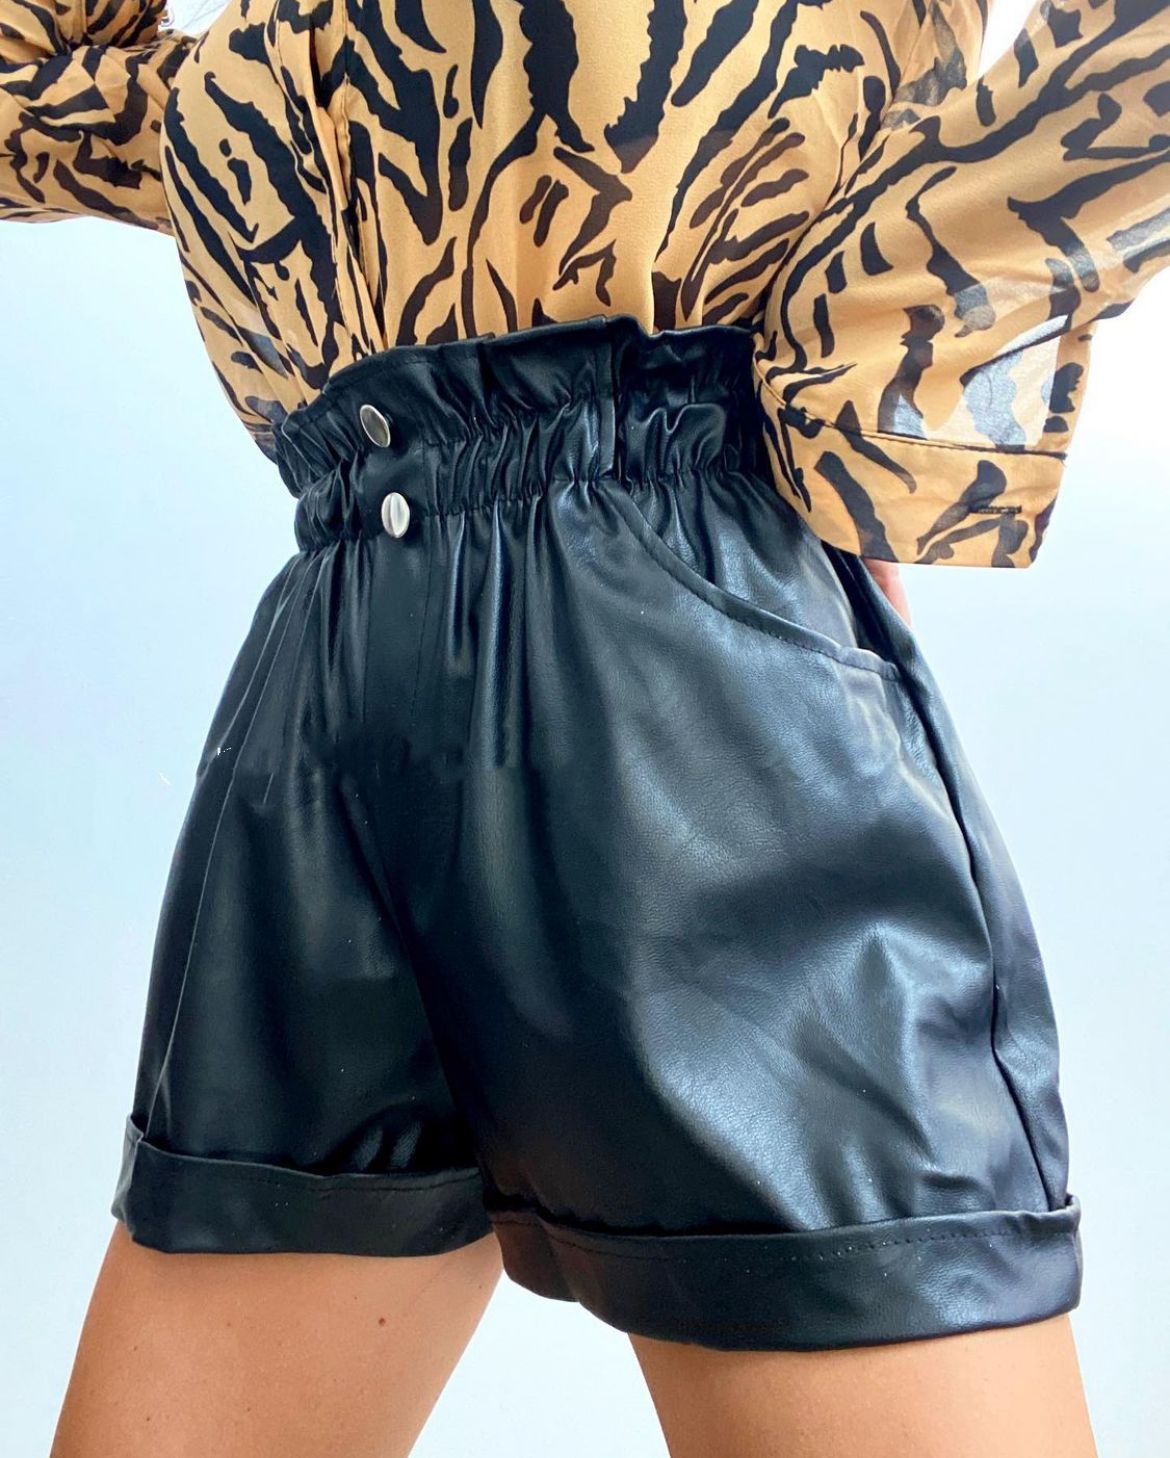 Pantaloncino Donna Shorts Ecopelle Aderente Elastico Casual Elegante Sensuale - LE STYLE DE PARIS